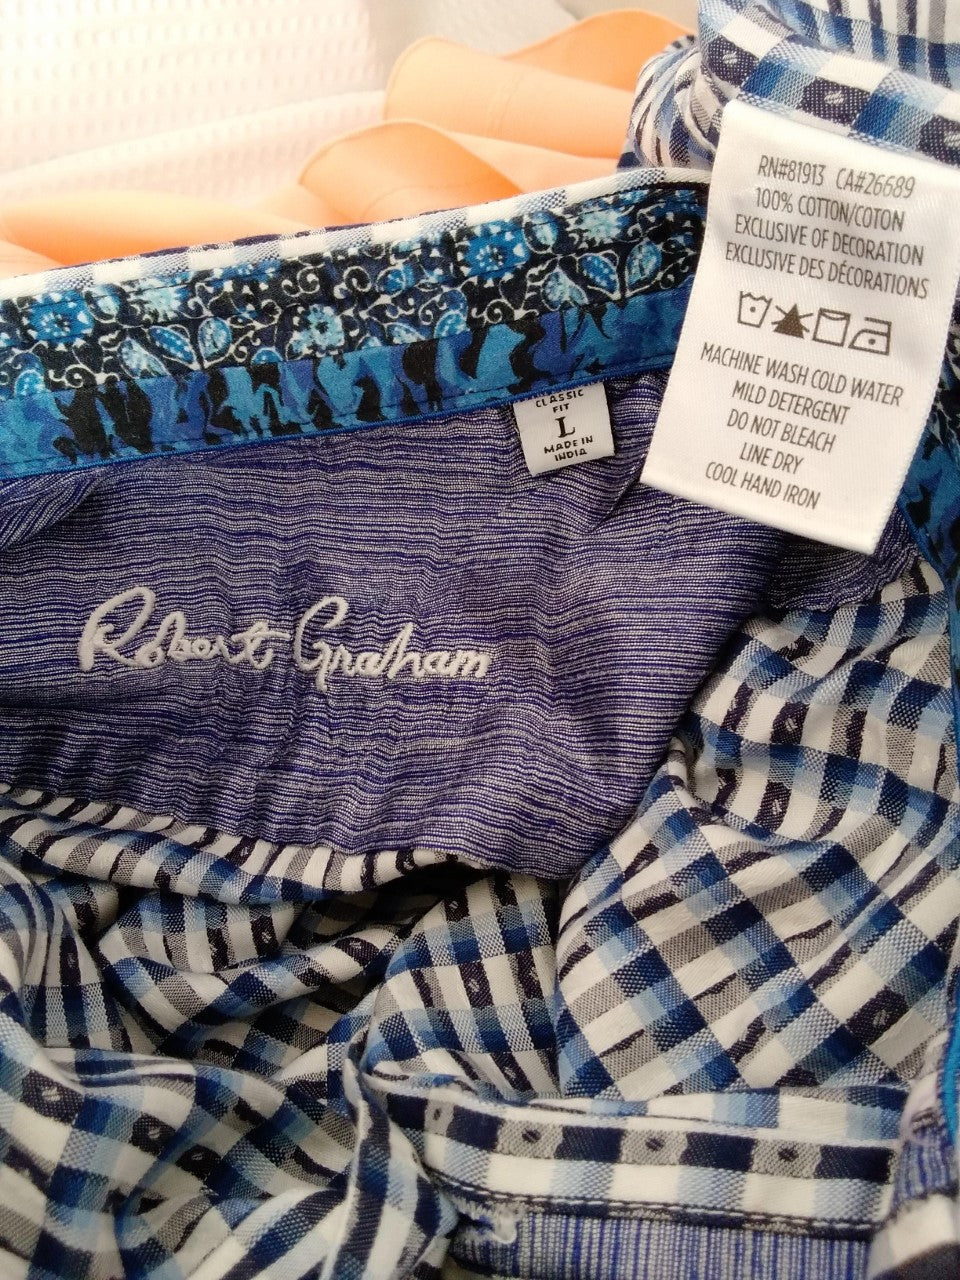 Robert Graham Blue White Check Print Long Sleeve Button Up Shirt - L